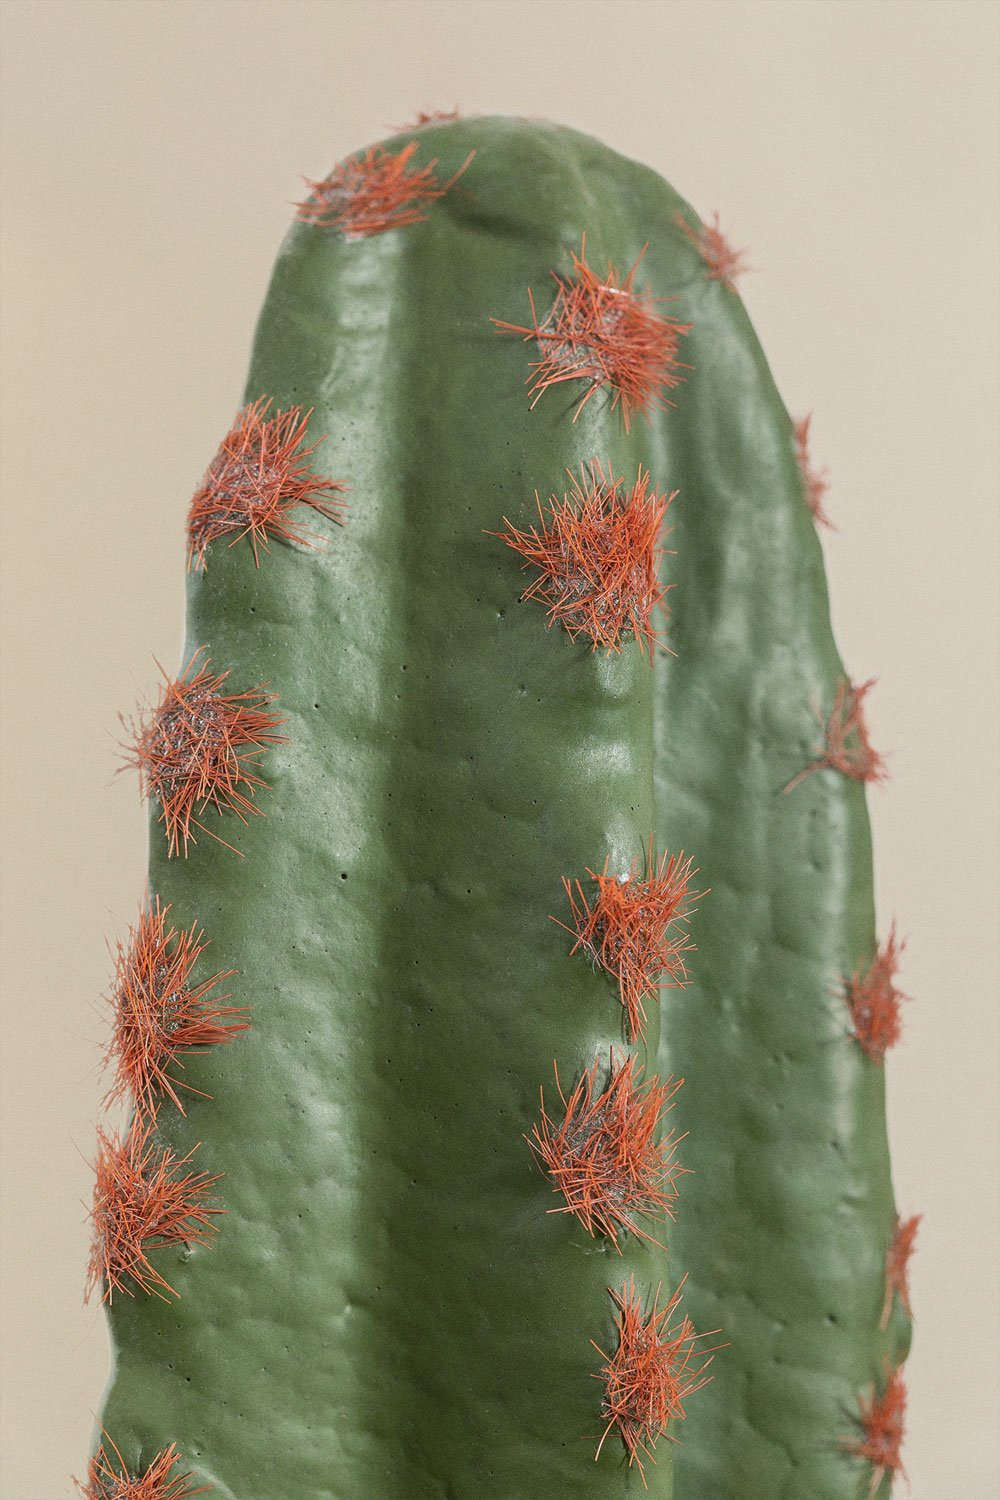 Künstlicher Kaktus Opuntia 60 cm - SKLUM